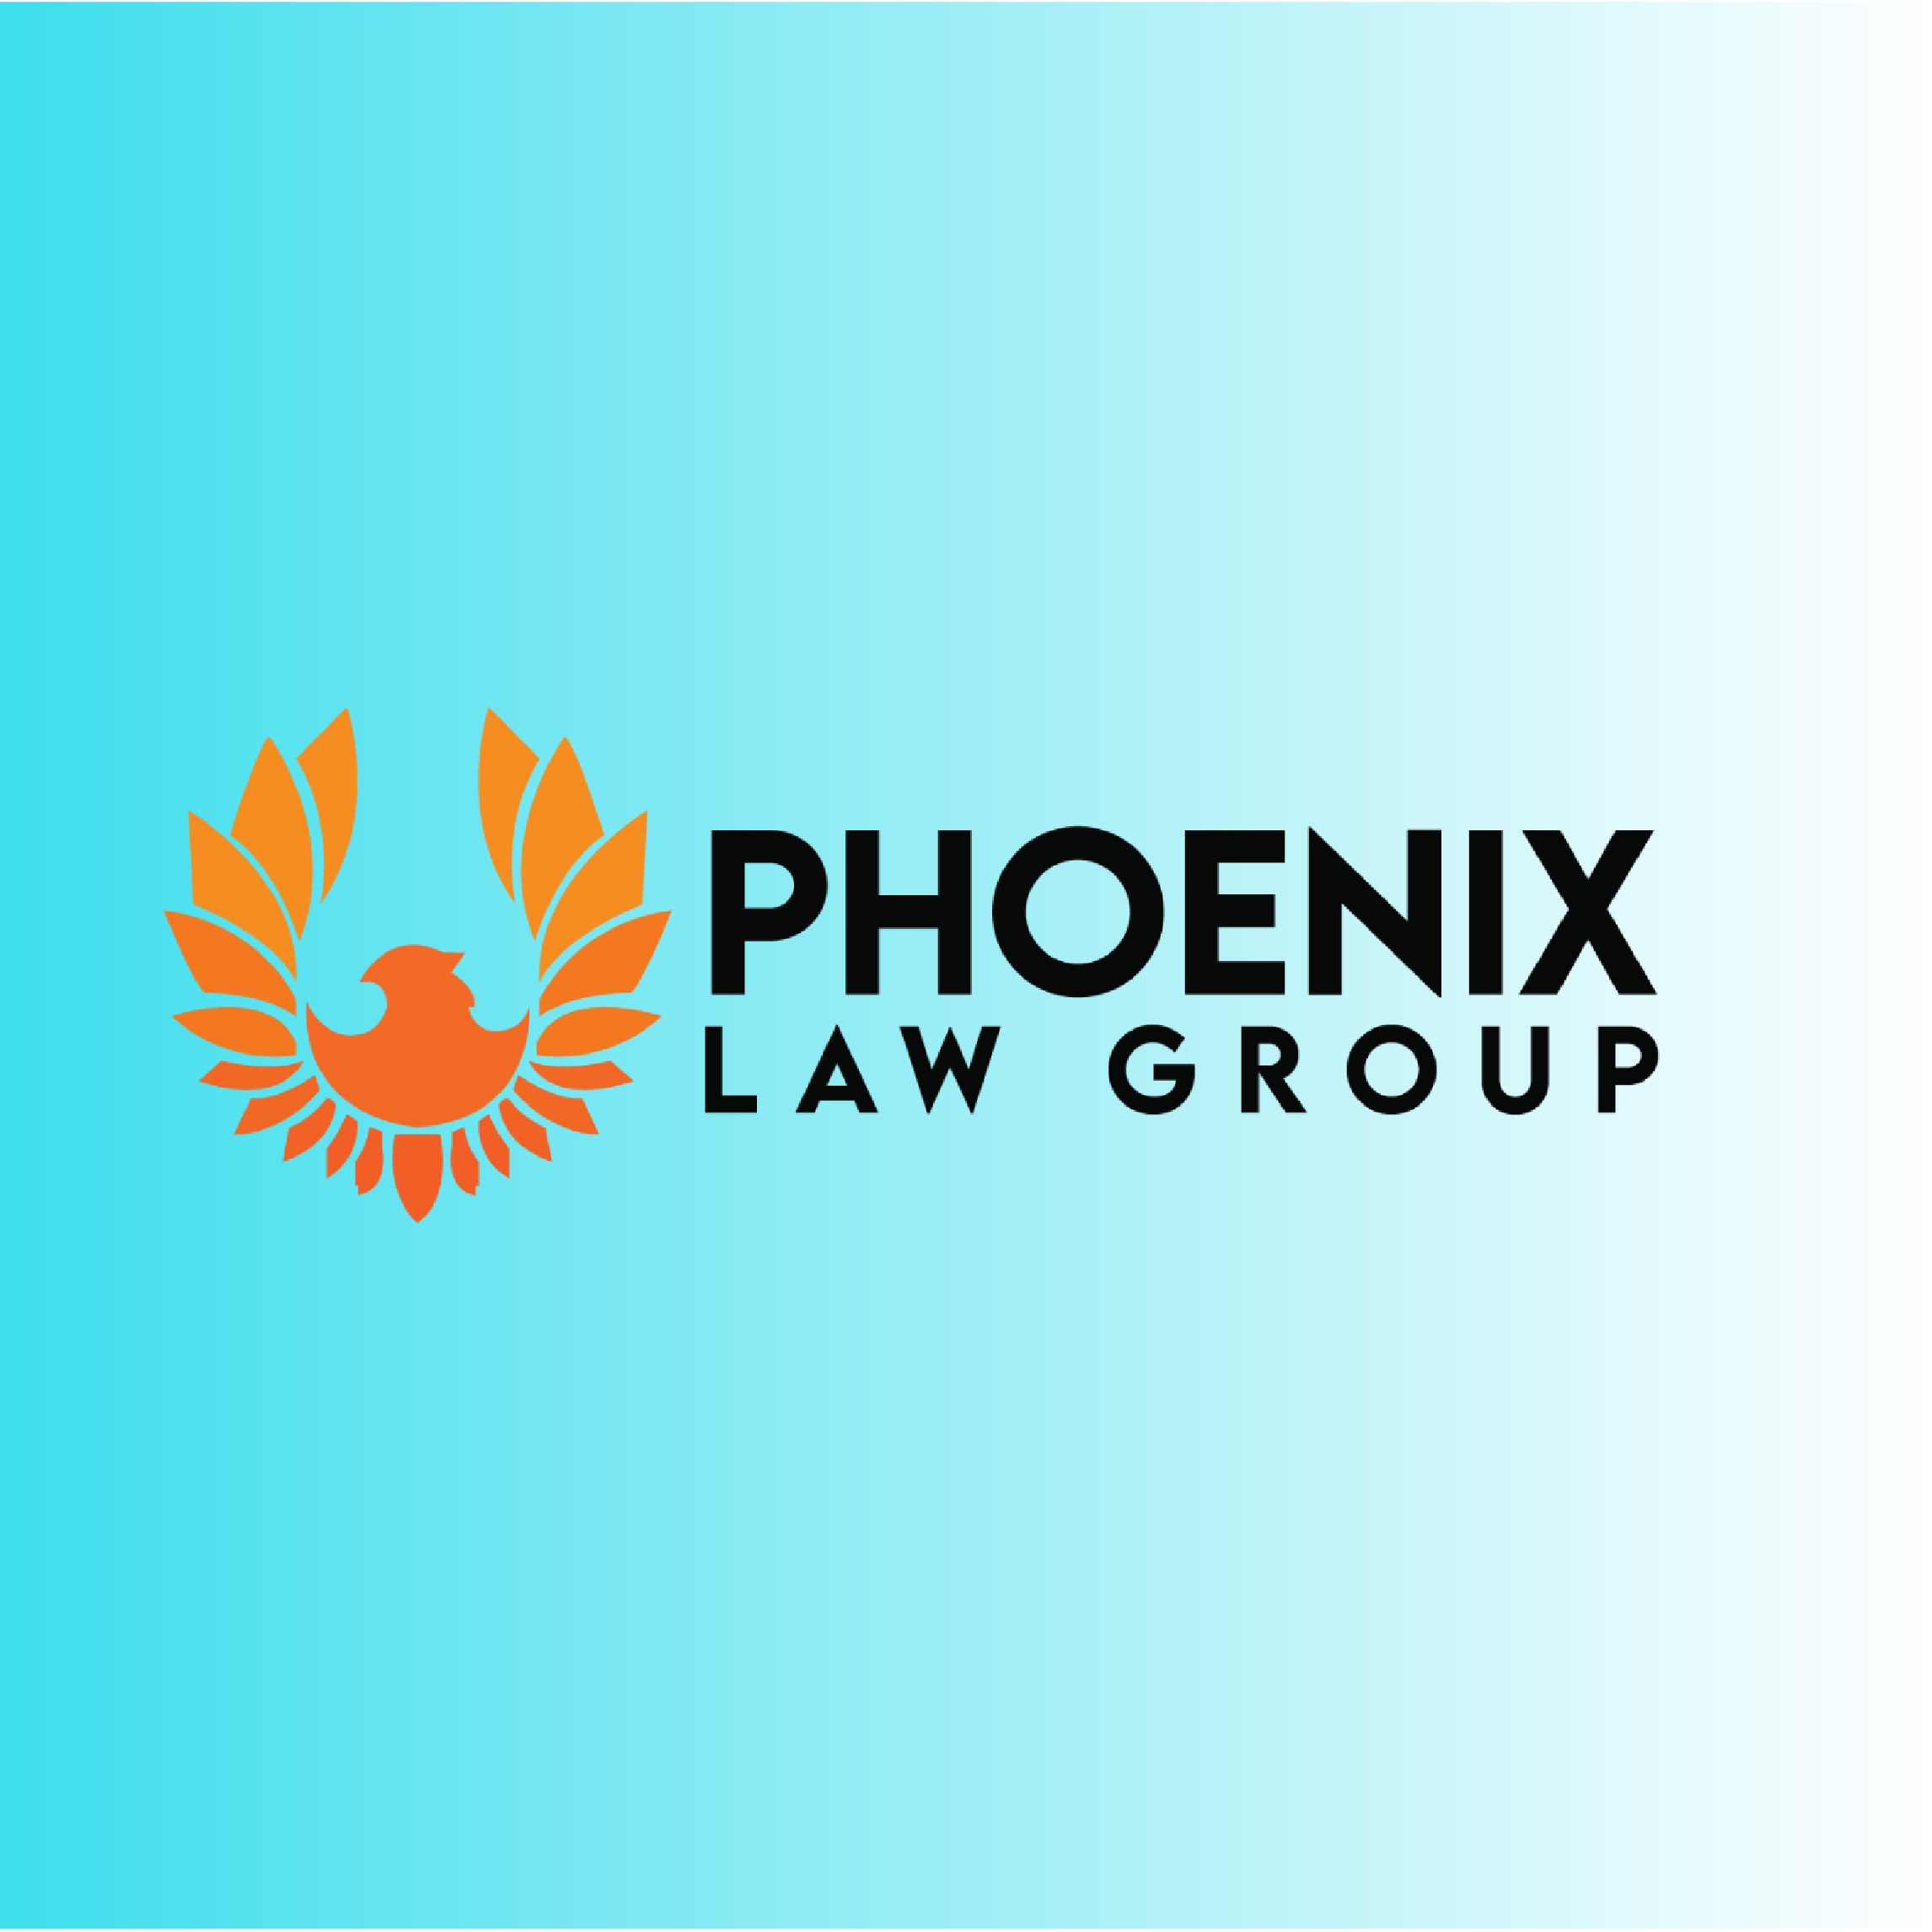 Phoenix Law Logo Design cover image.